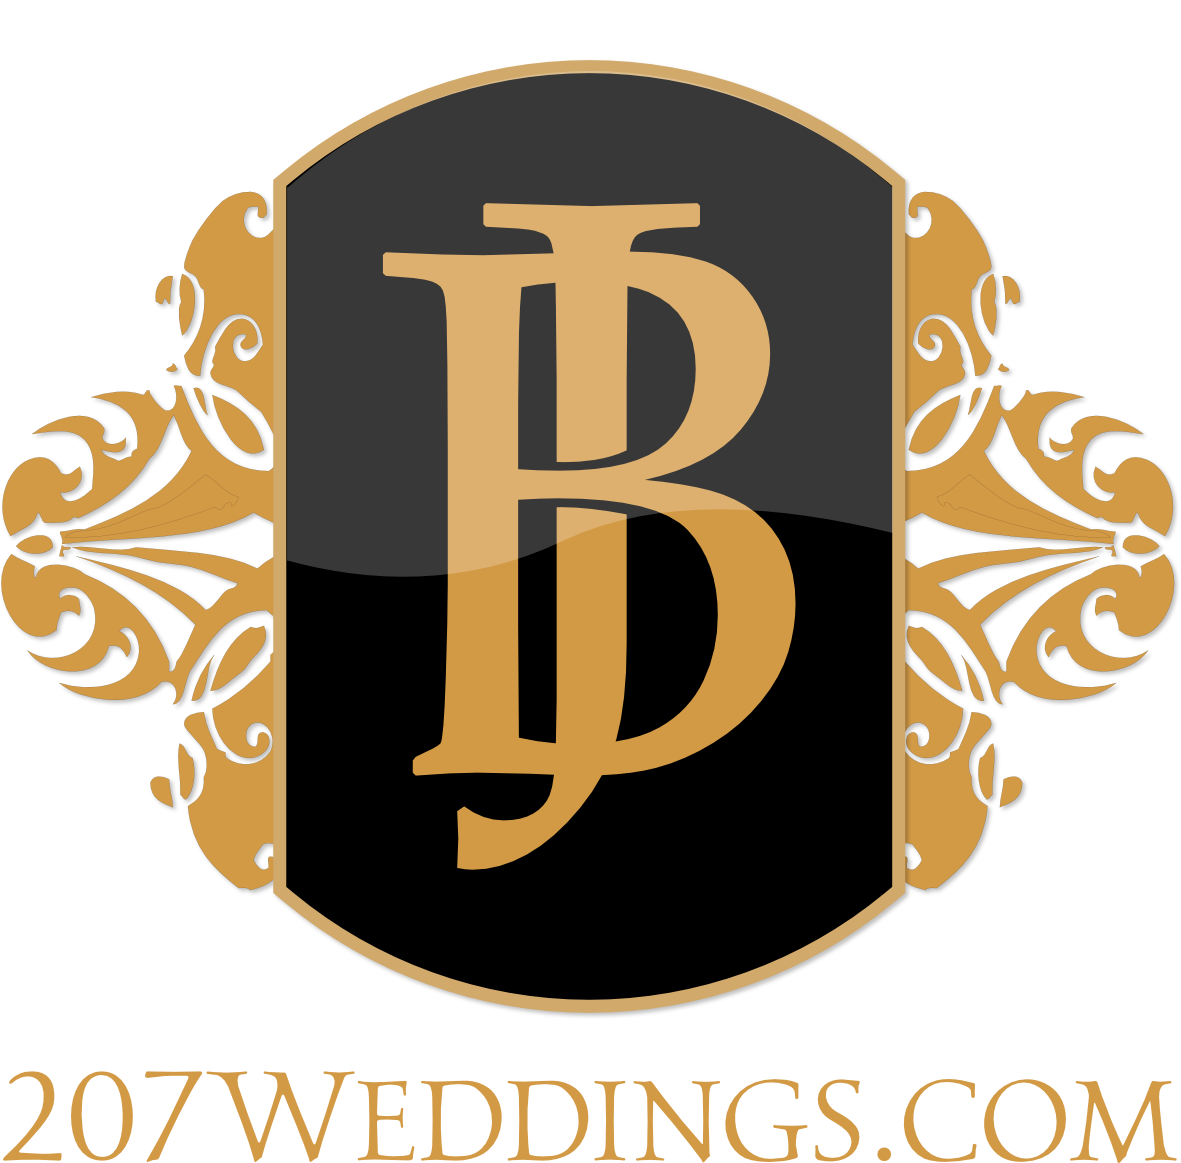 Colorado Wedding Photographers | 207Weddings Films & Photography